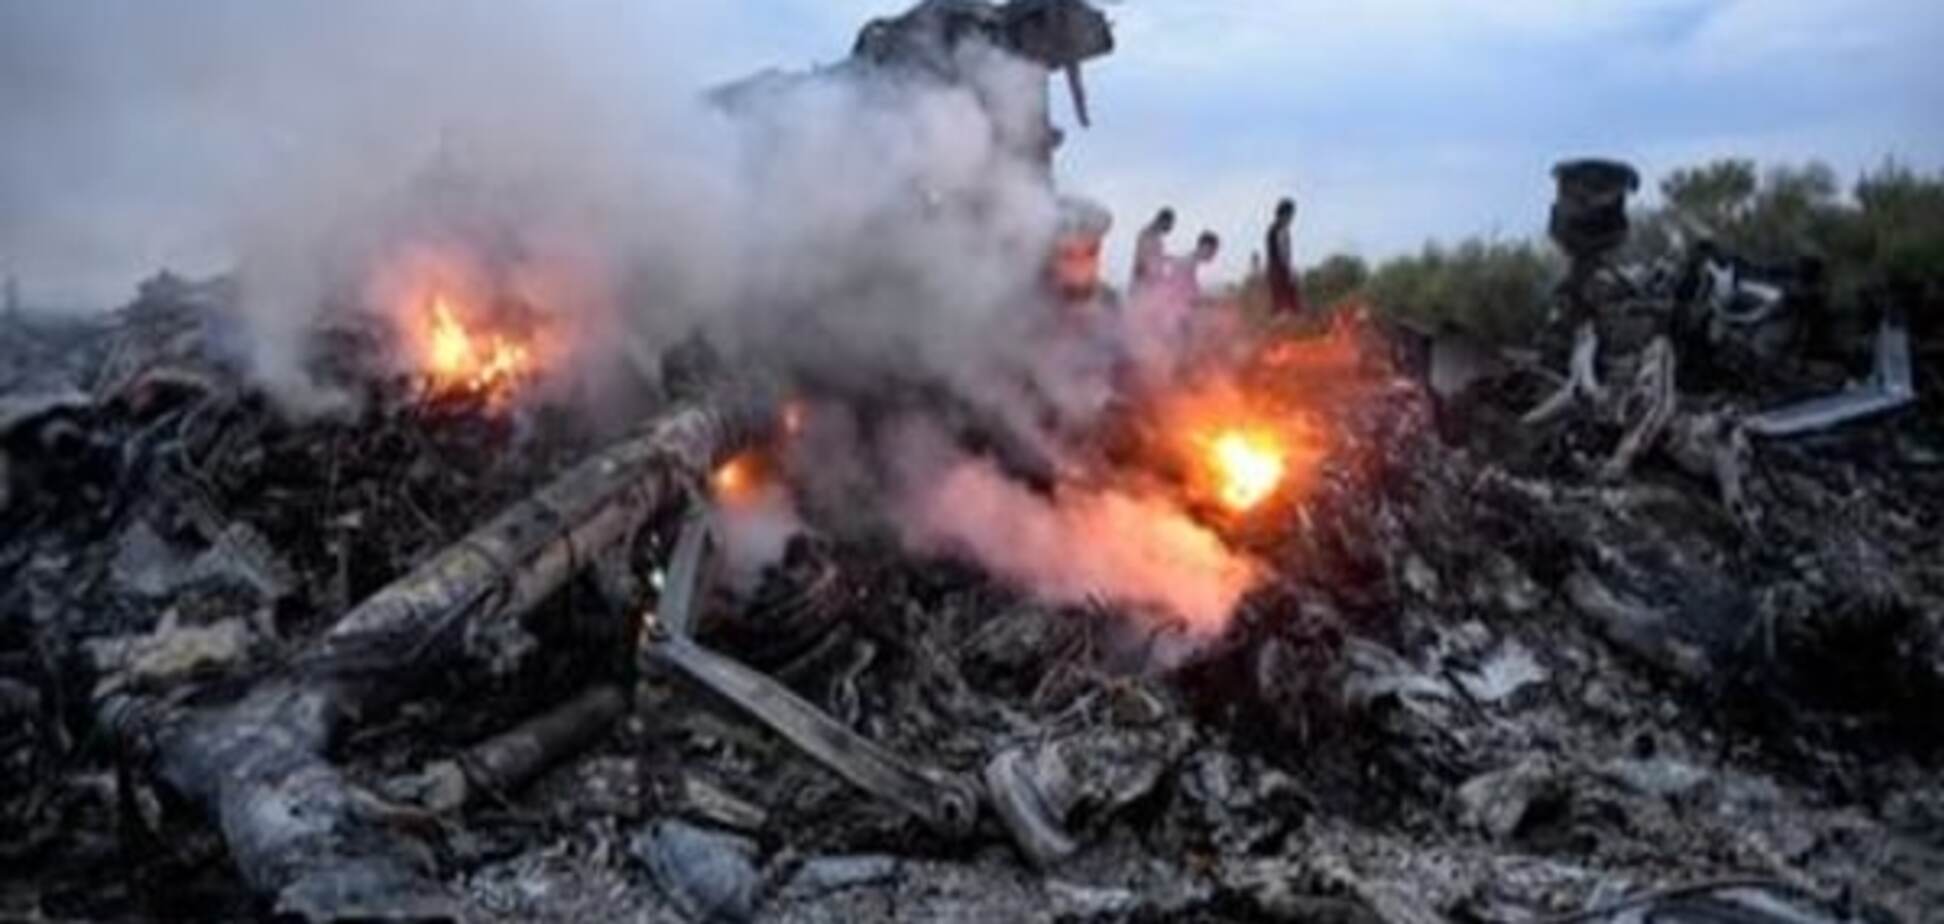 Комментарий: Конца в истории с MH17 пока не видно